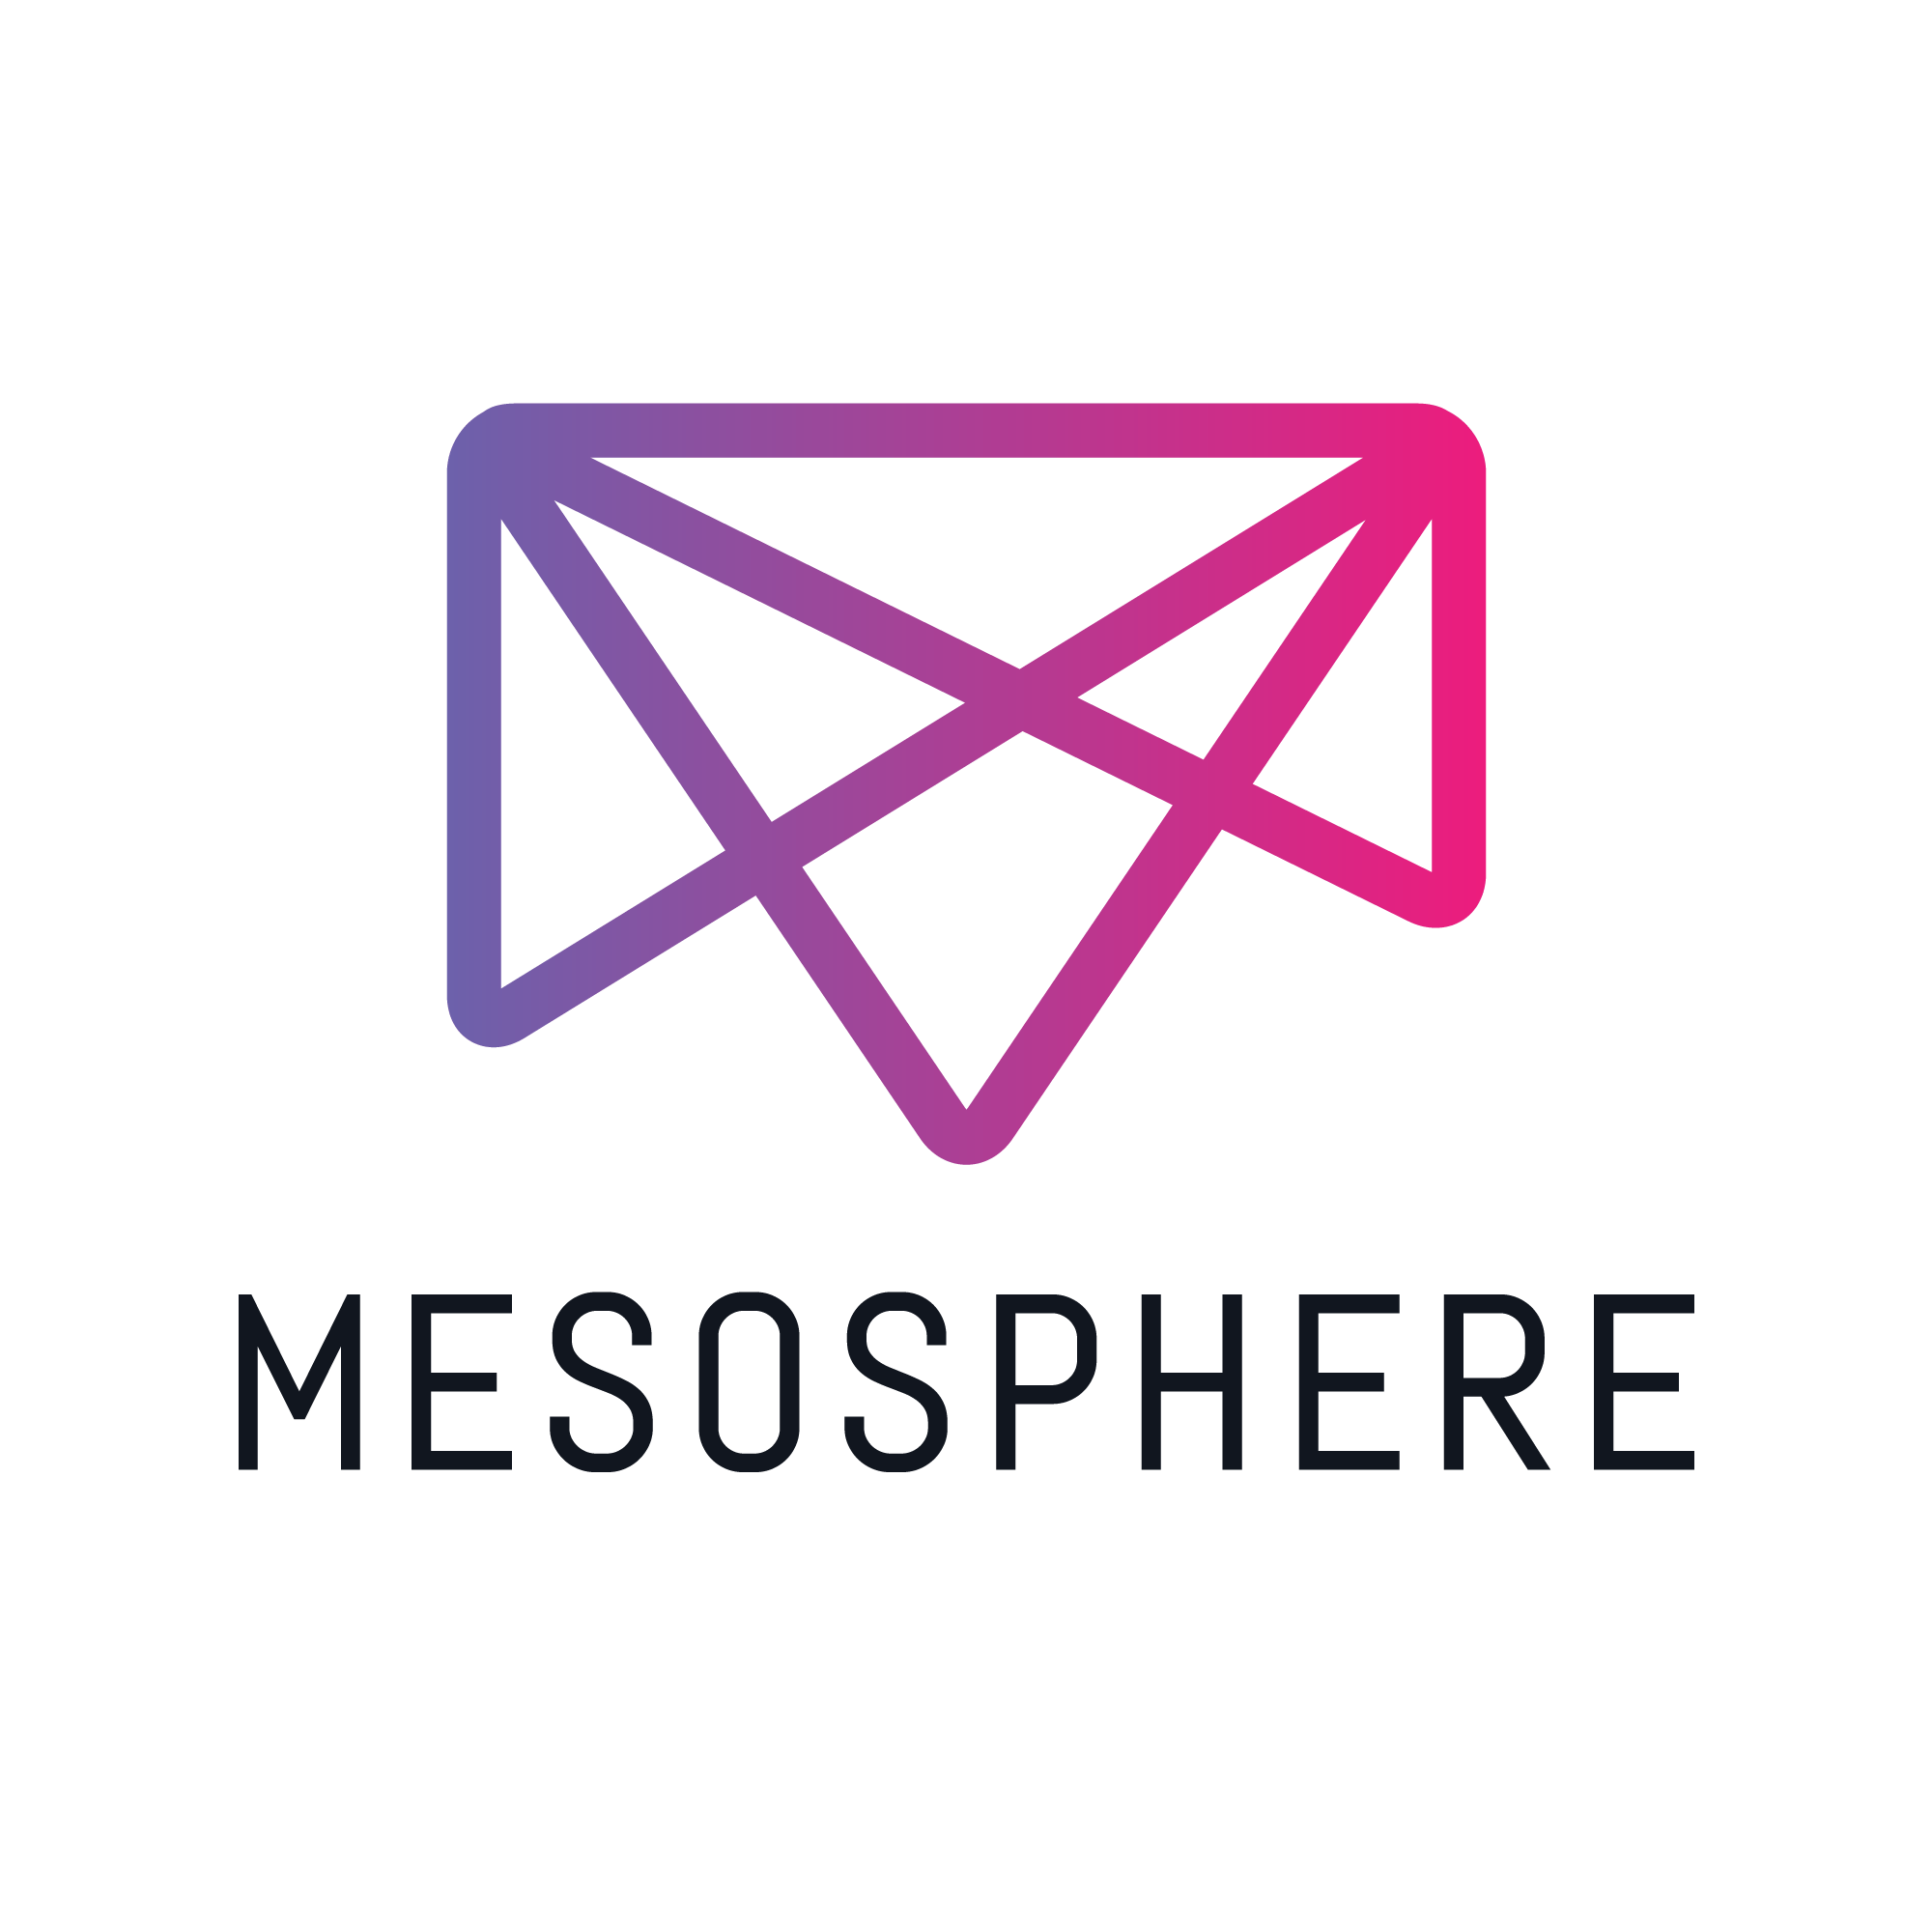 Mesosphere Logo - The Premier Platform For Building Data Rich Apps